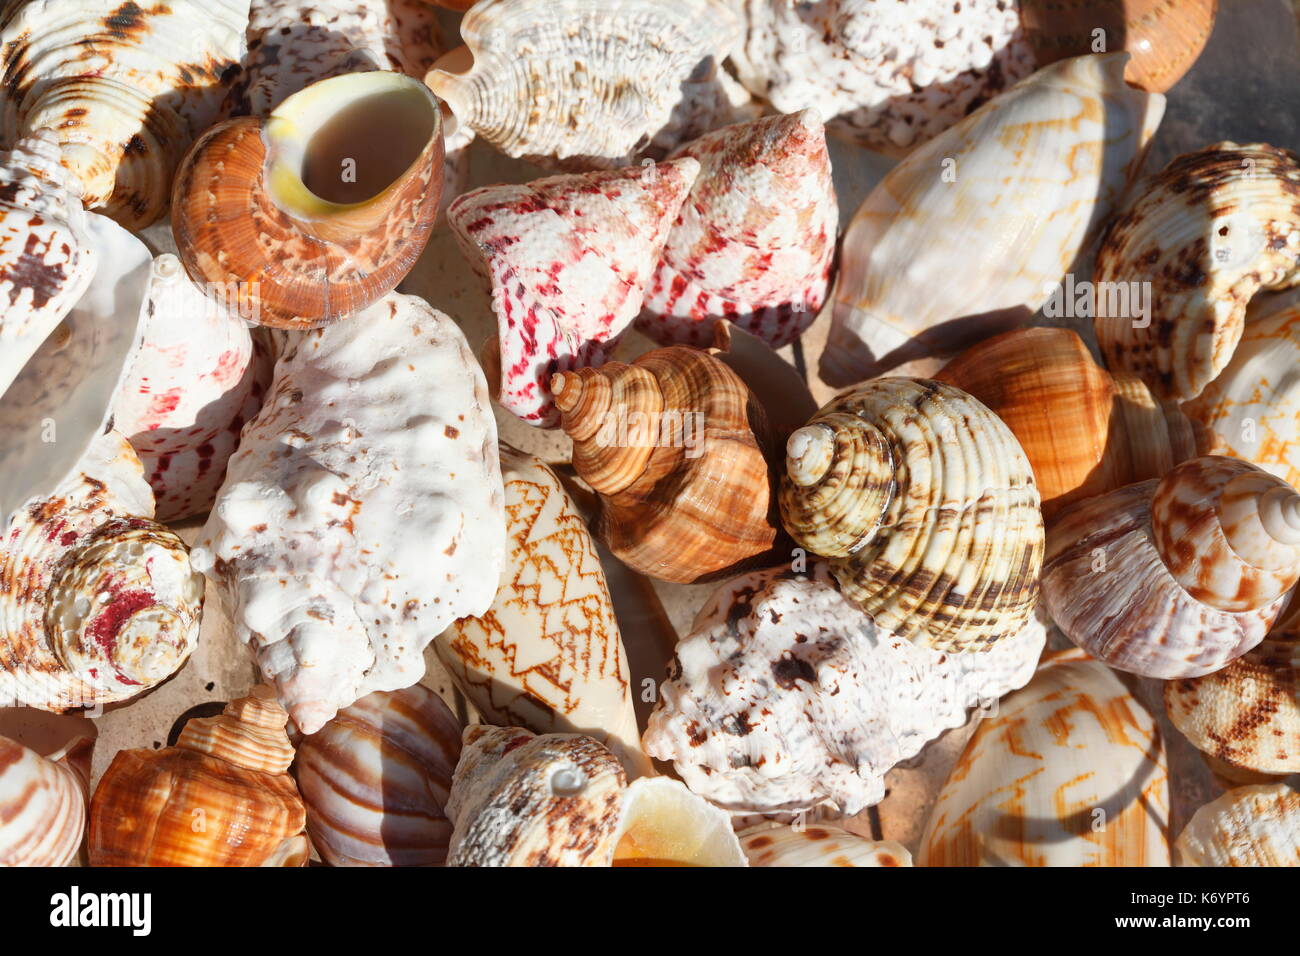 Mussels shells in a Souvenier Shop Stock Photo